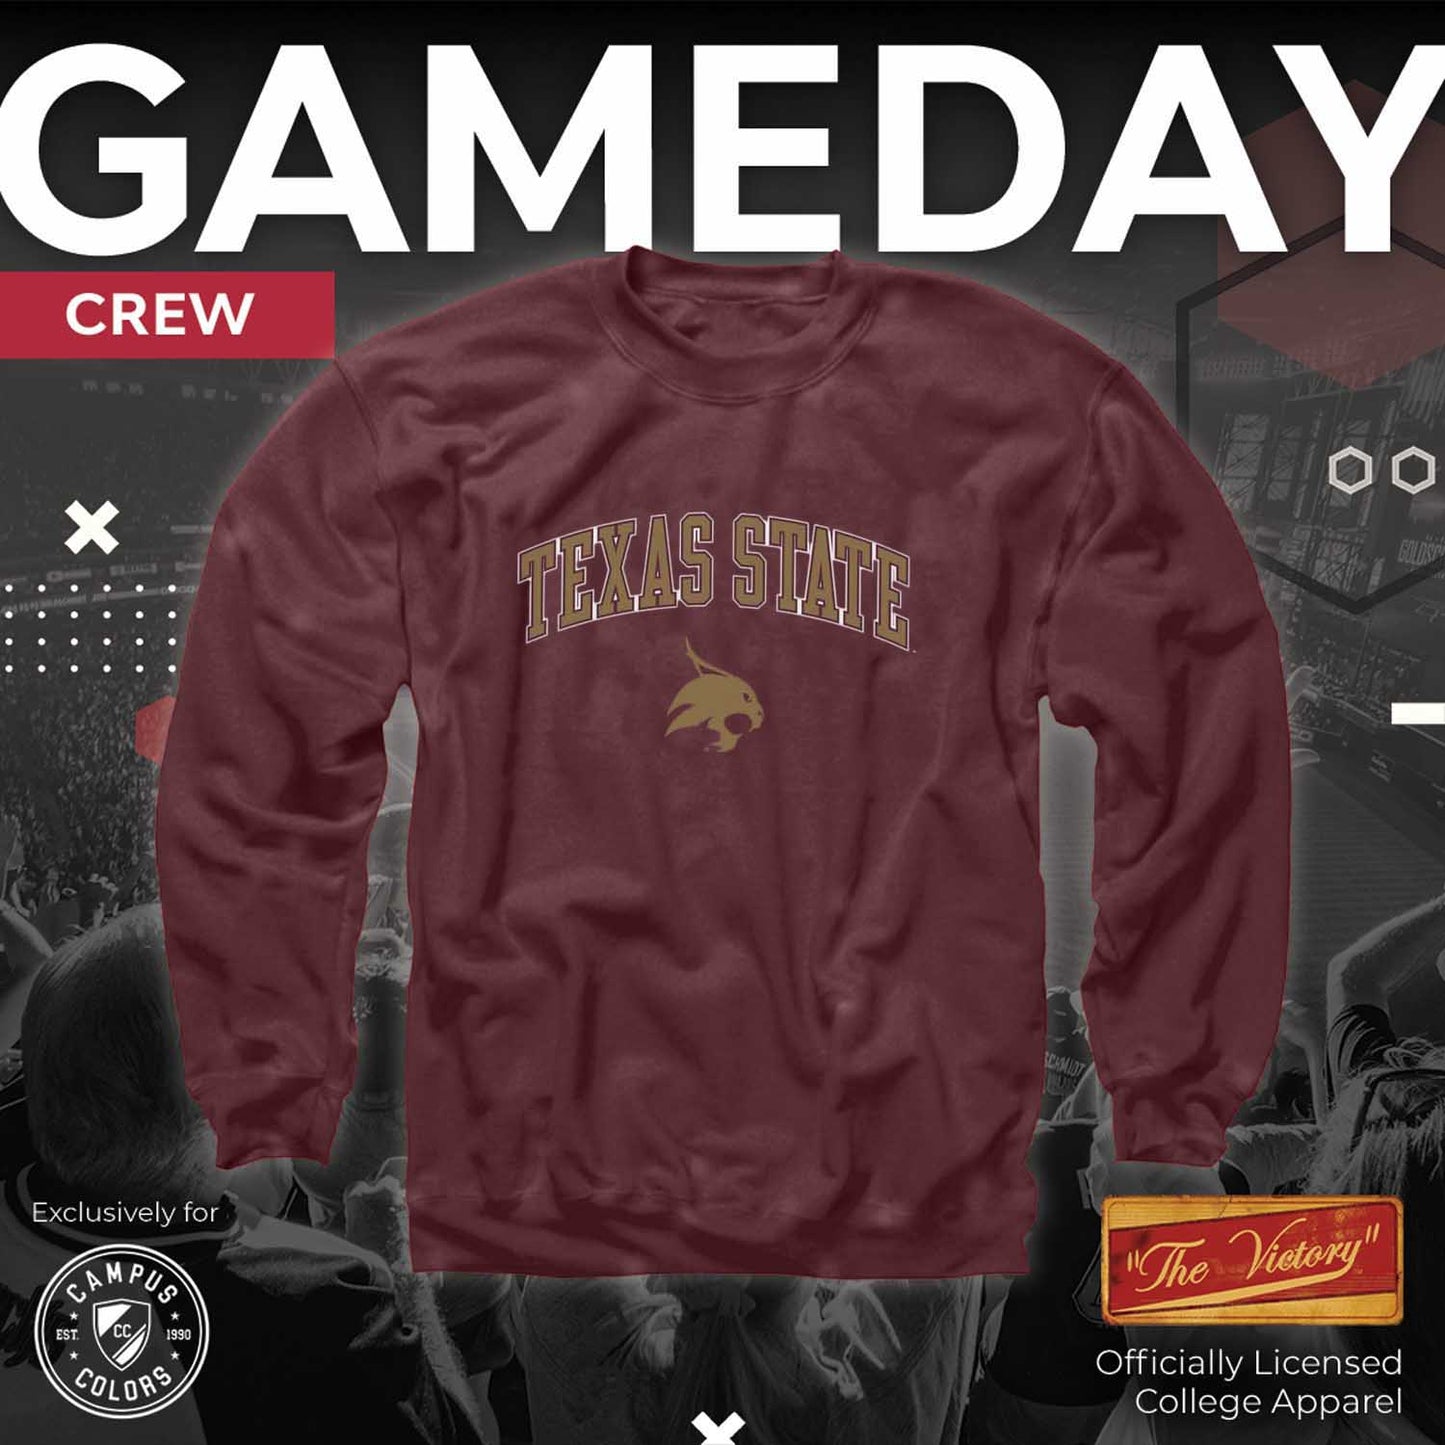 Texas State Bobcats Adult Arch & Logo Soft Style Gameday Crewneck Sweatshirt - Maroon